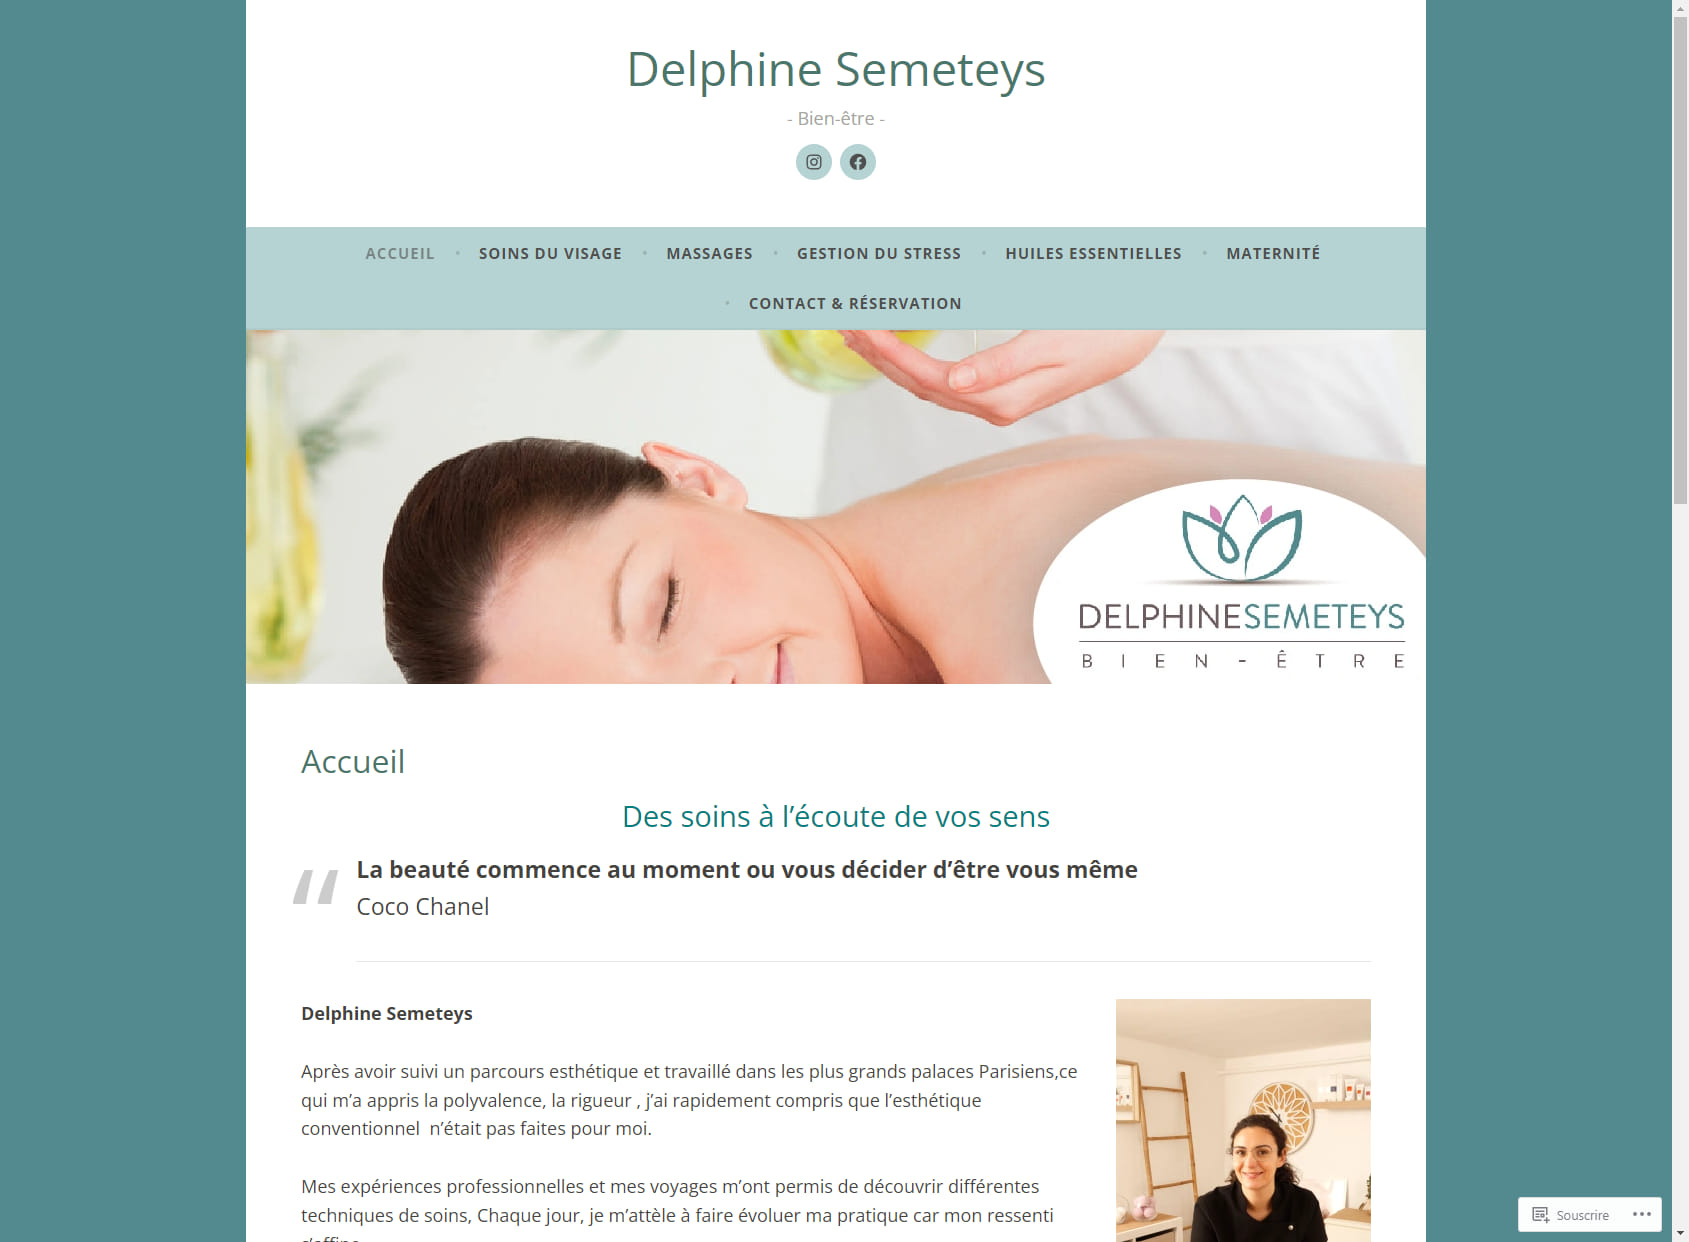 Delphine Semeteys Bien-etre